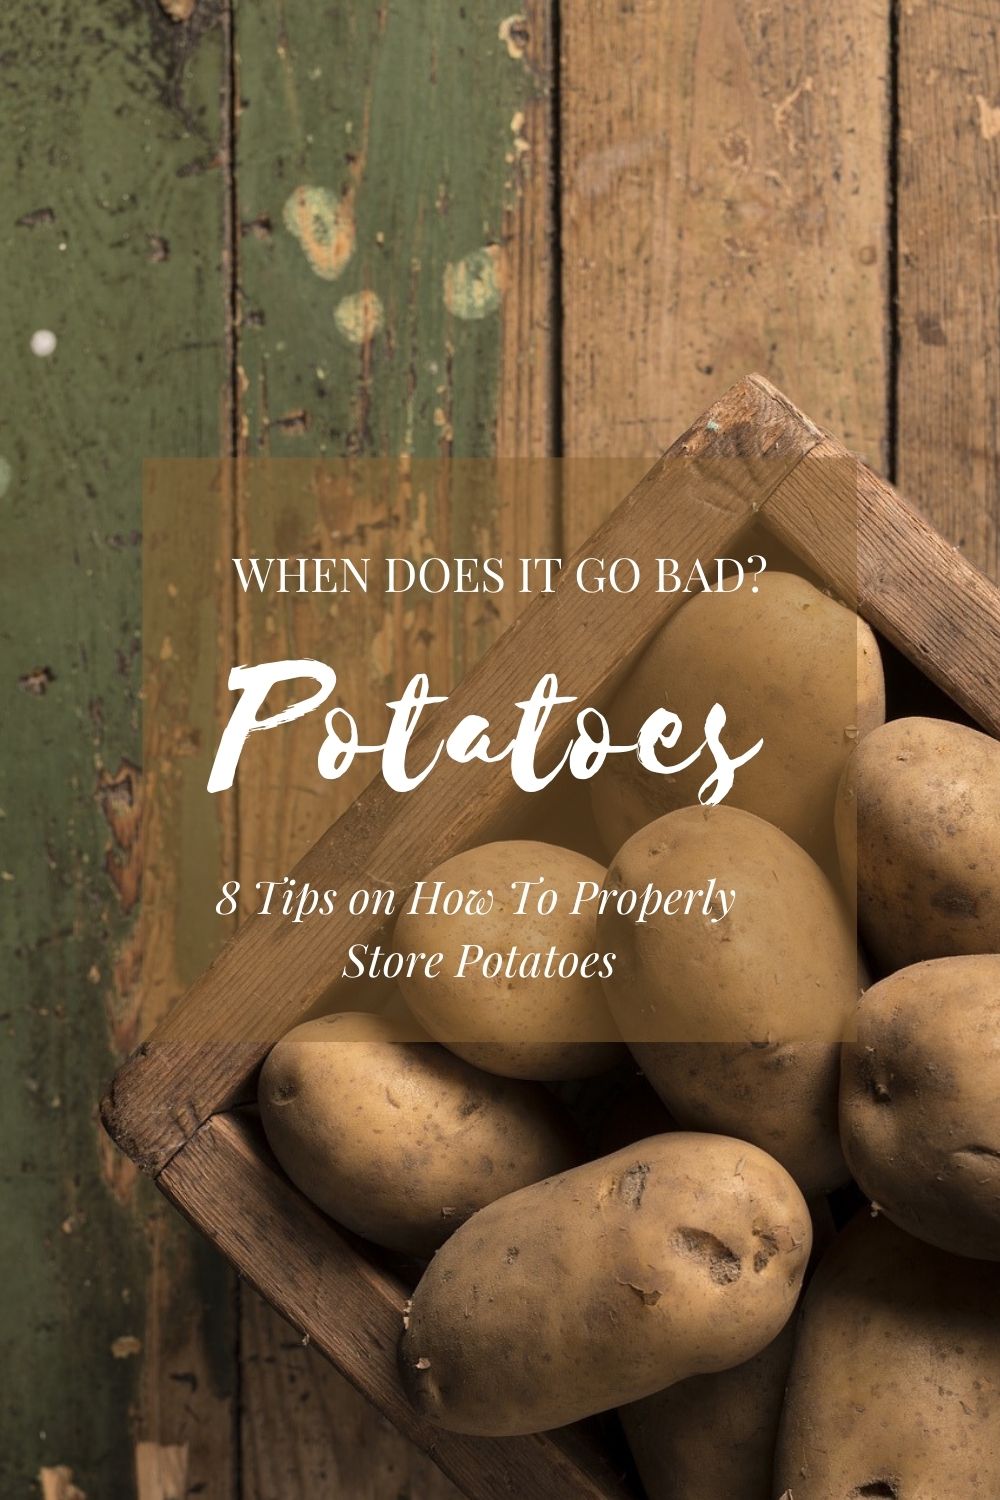 When Do Potatoes Go Bad?